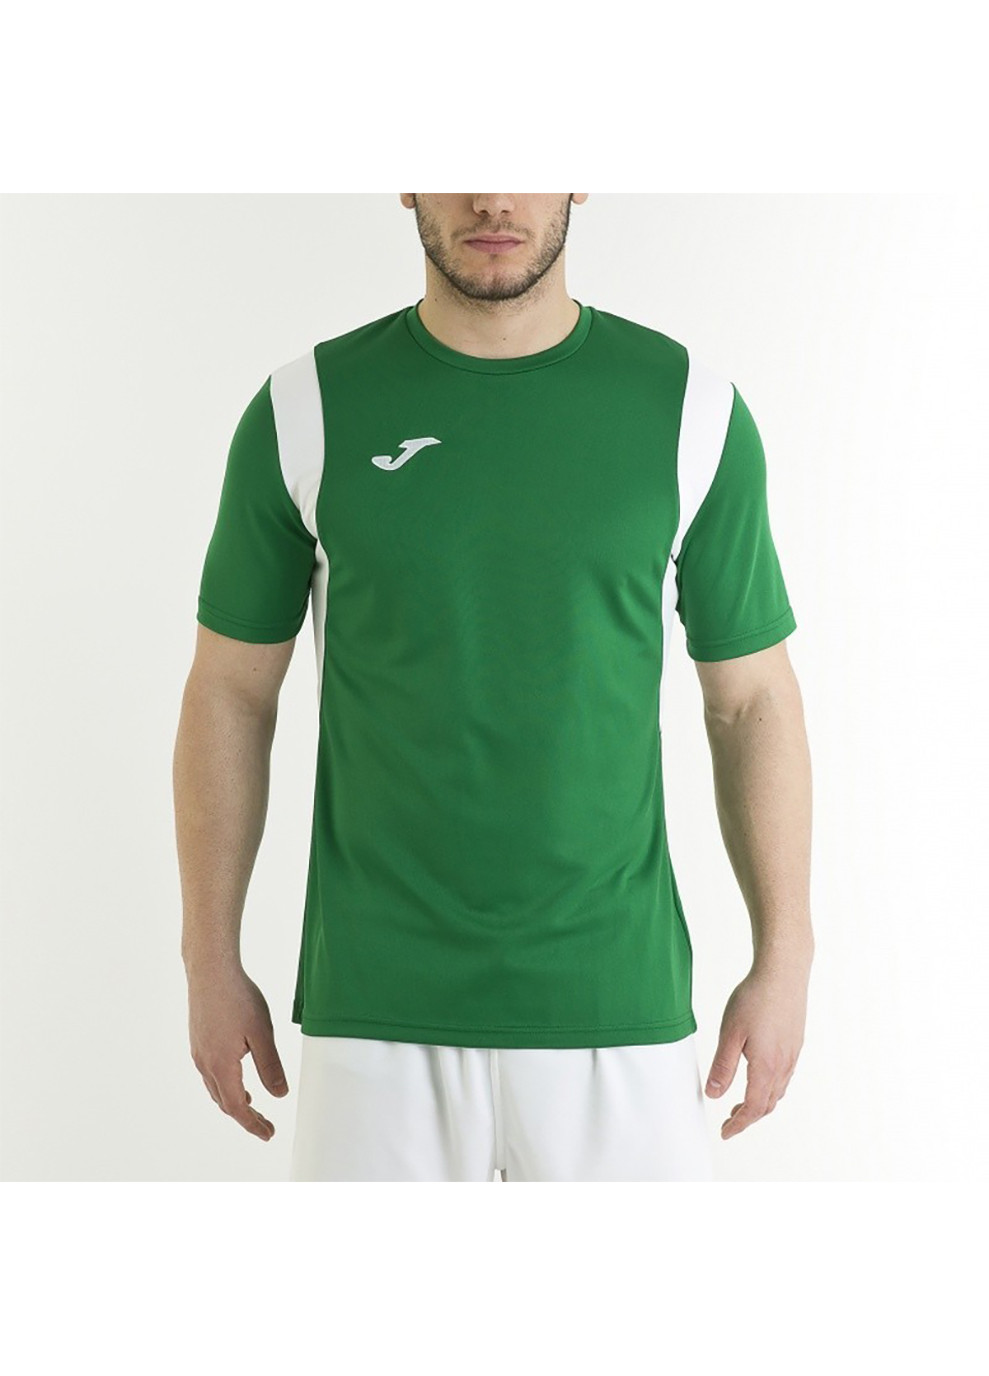 Зелена футболка t-shirt dinamo green s/s зелений 100446.450 Joma